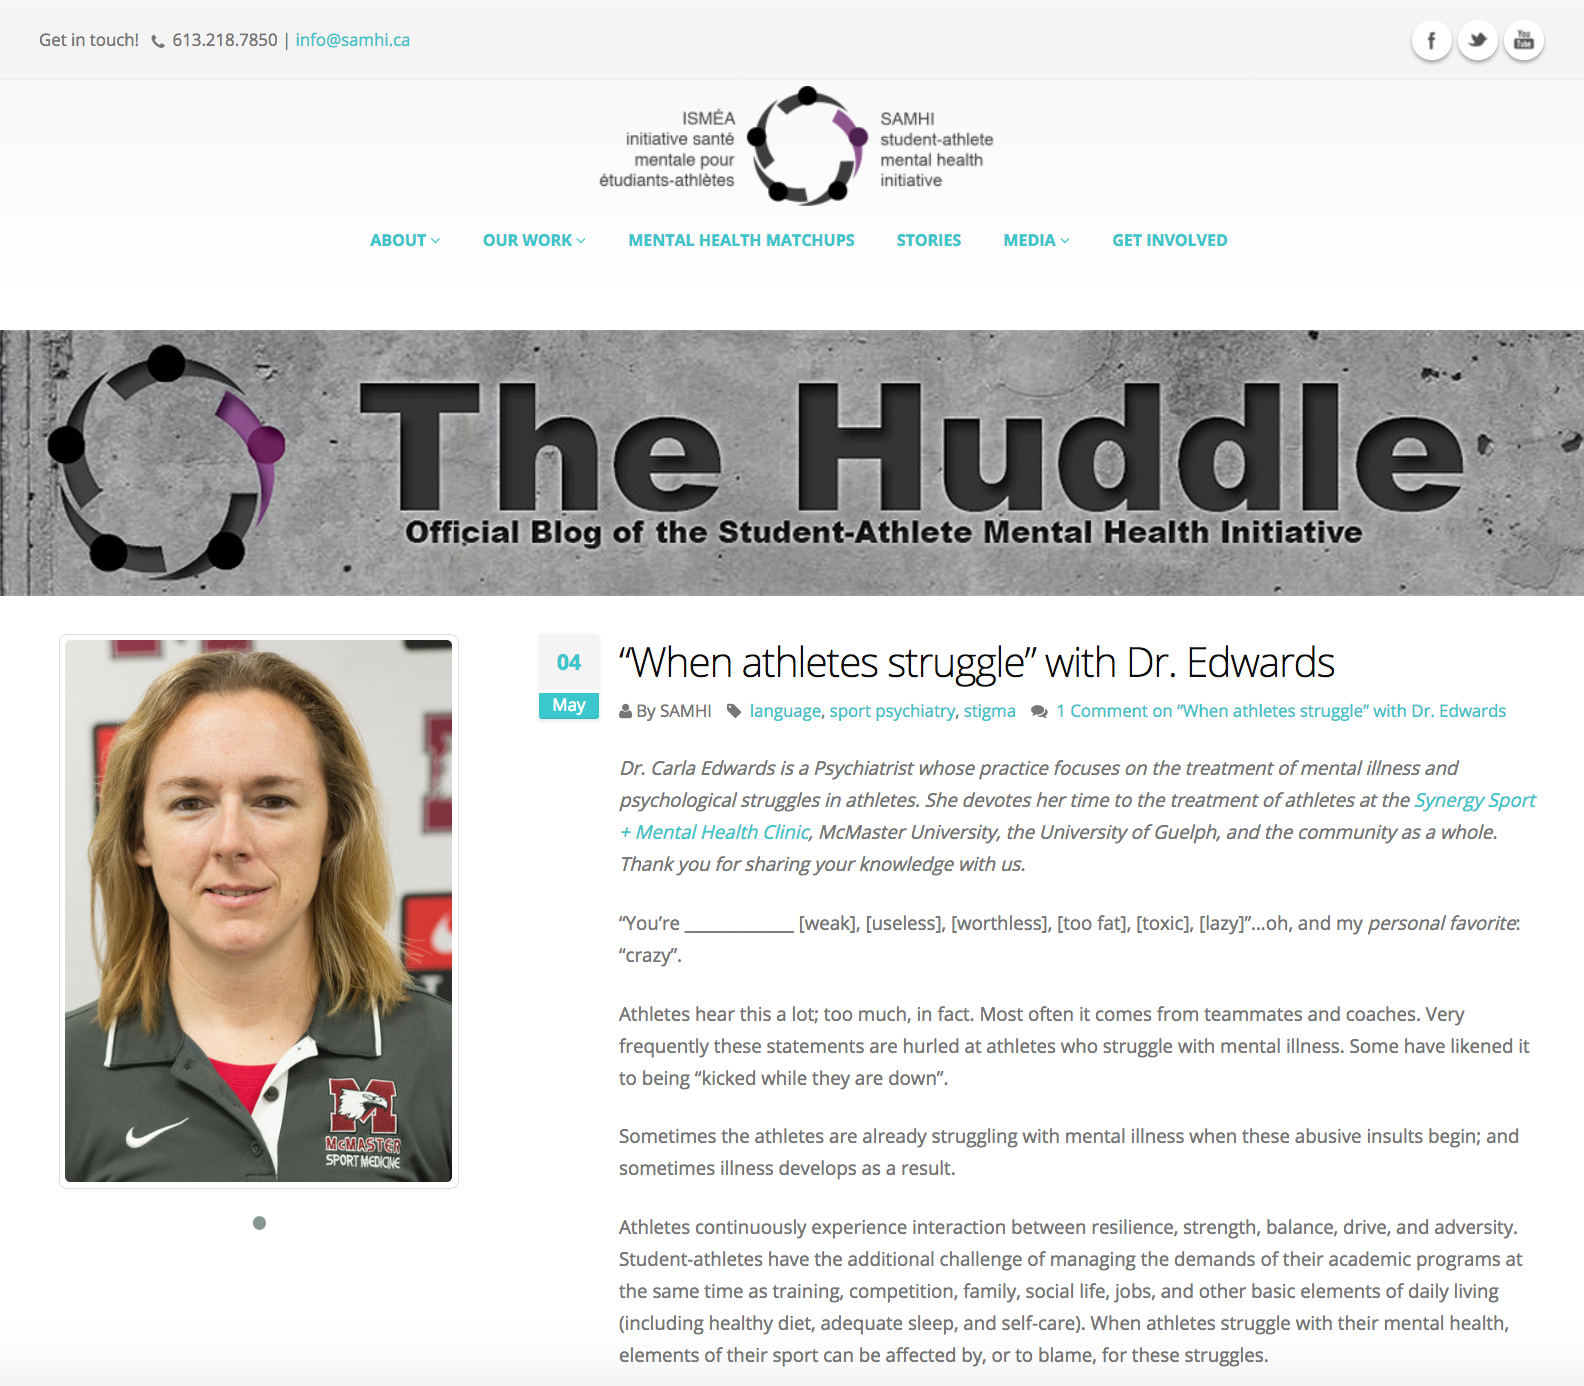   Dr.   Carla Edwards addresses the struggles of athletes  